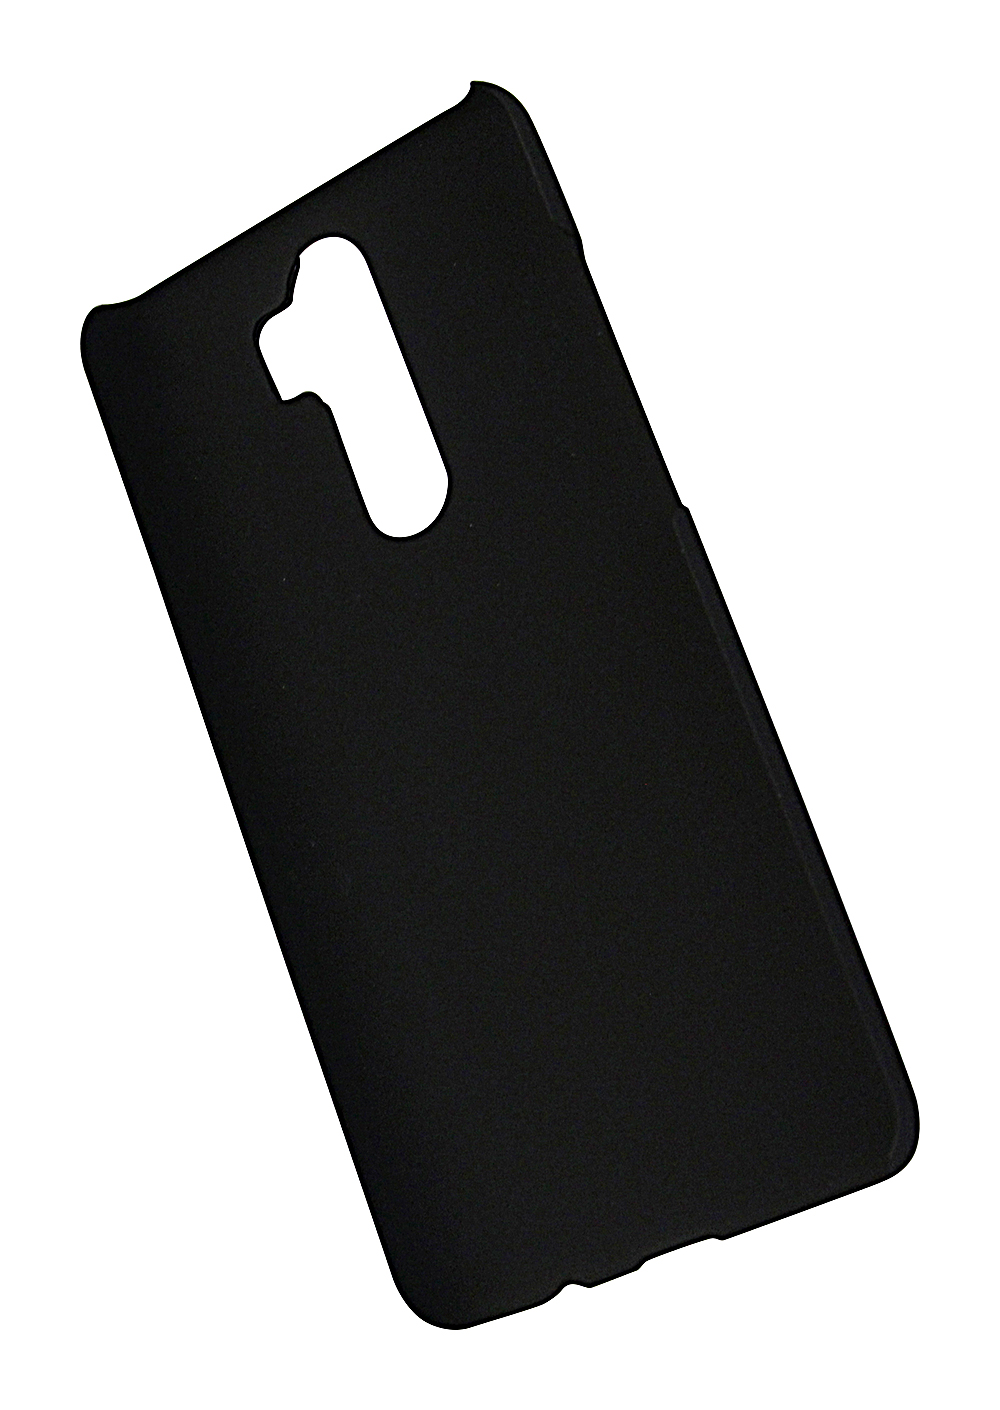 CoverIn Skimblocker XL Magnet Wallet Xiaomi Redmi Note 8 Pro